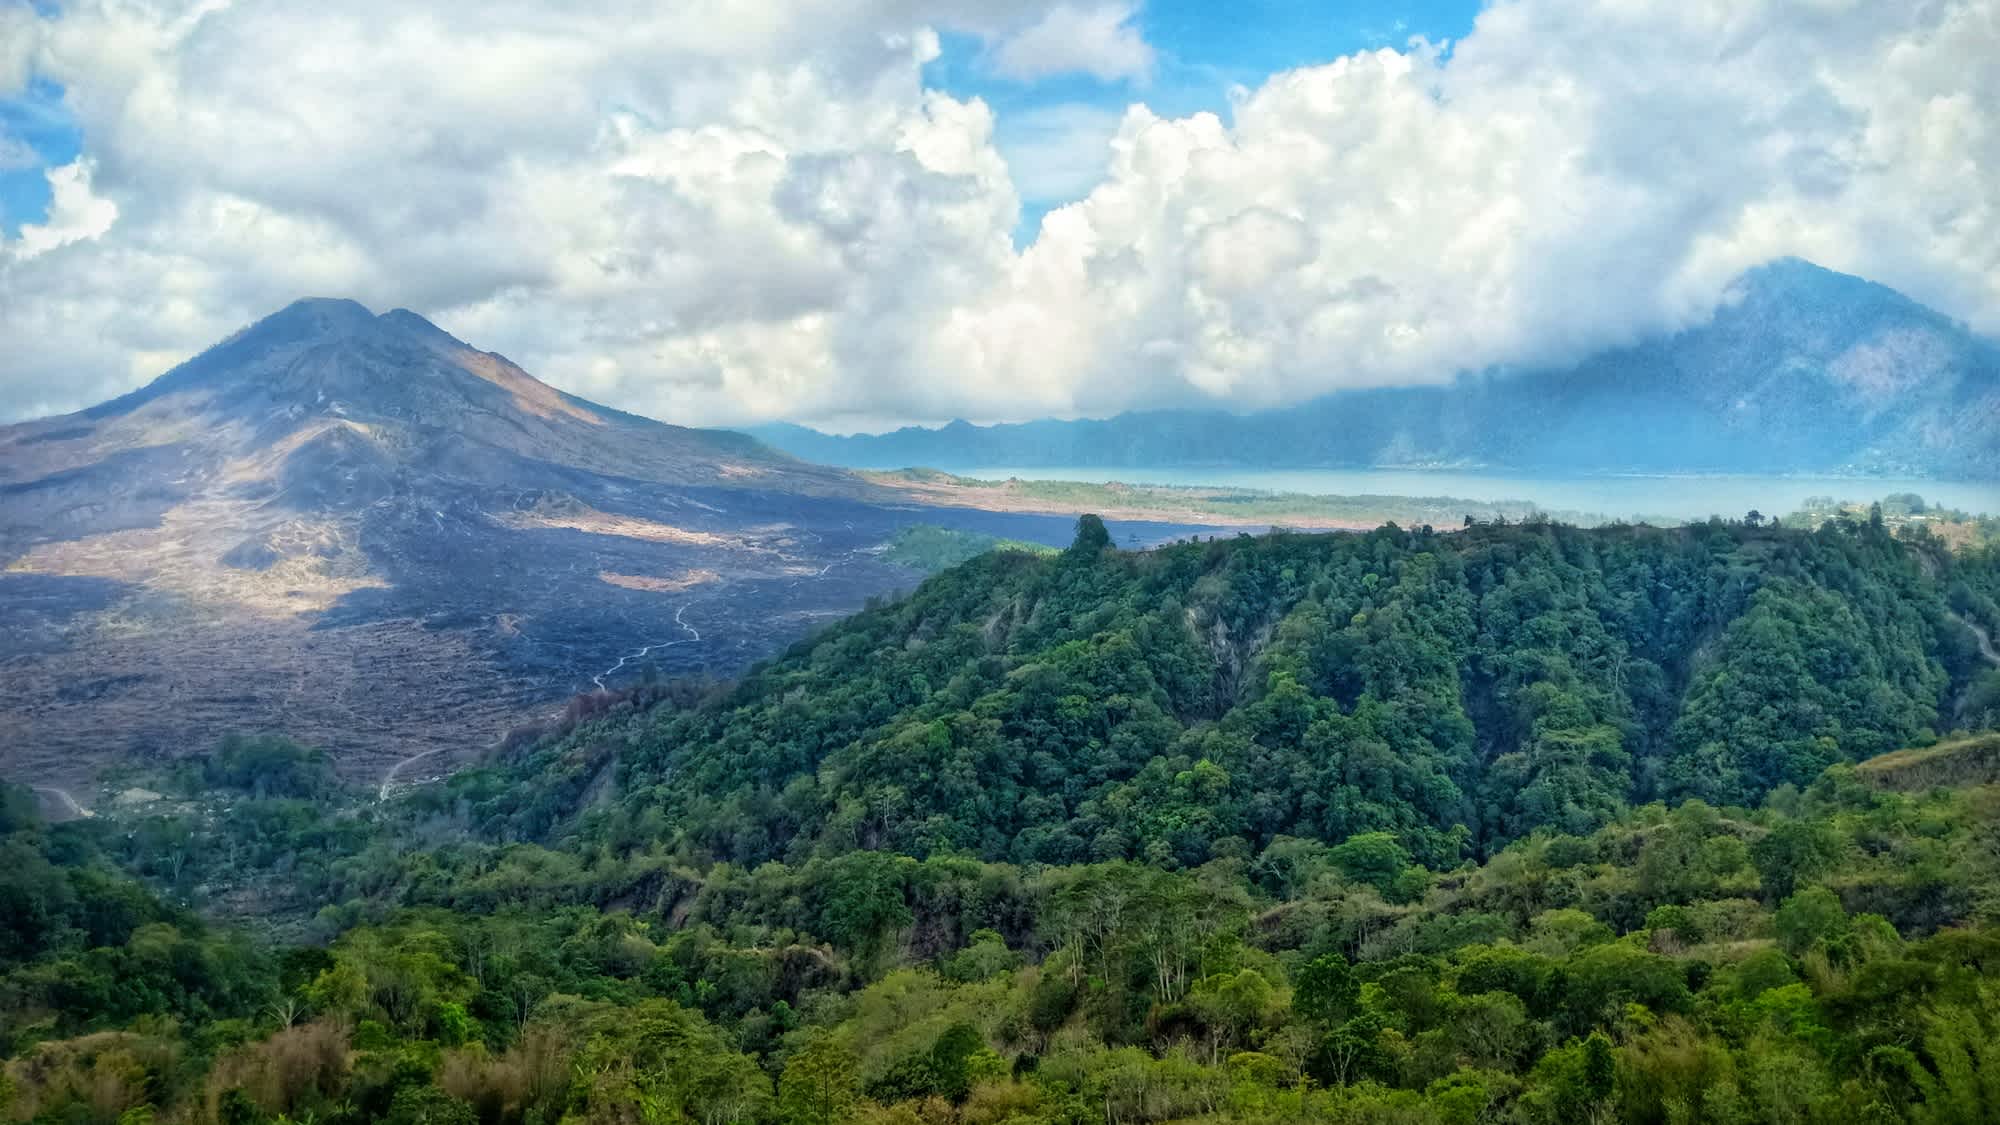 Blick auf den Batur Mountain bei Kintamani, Bali, Indonesien

